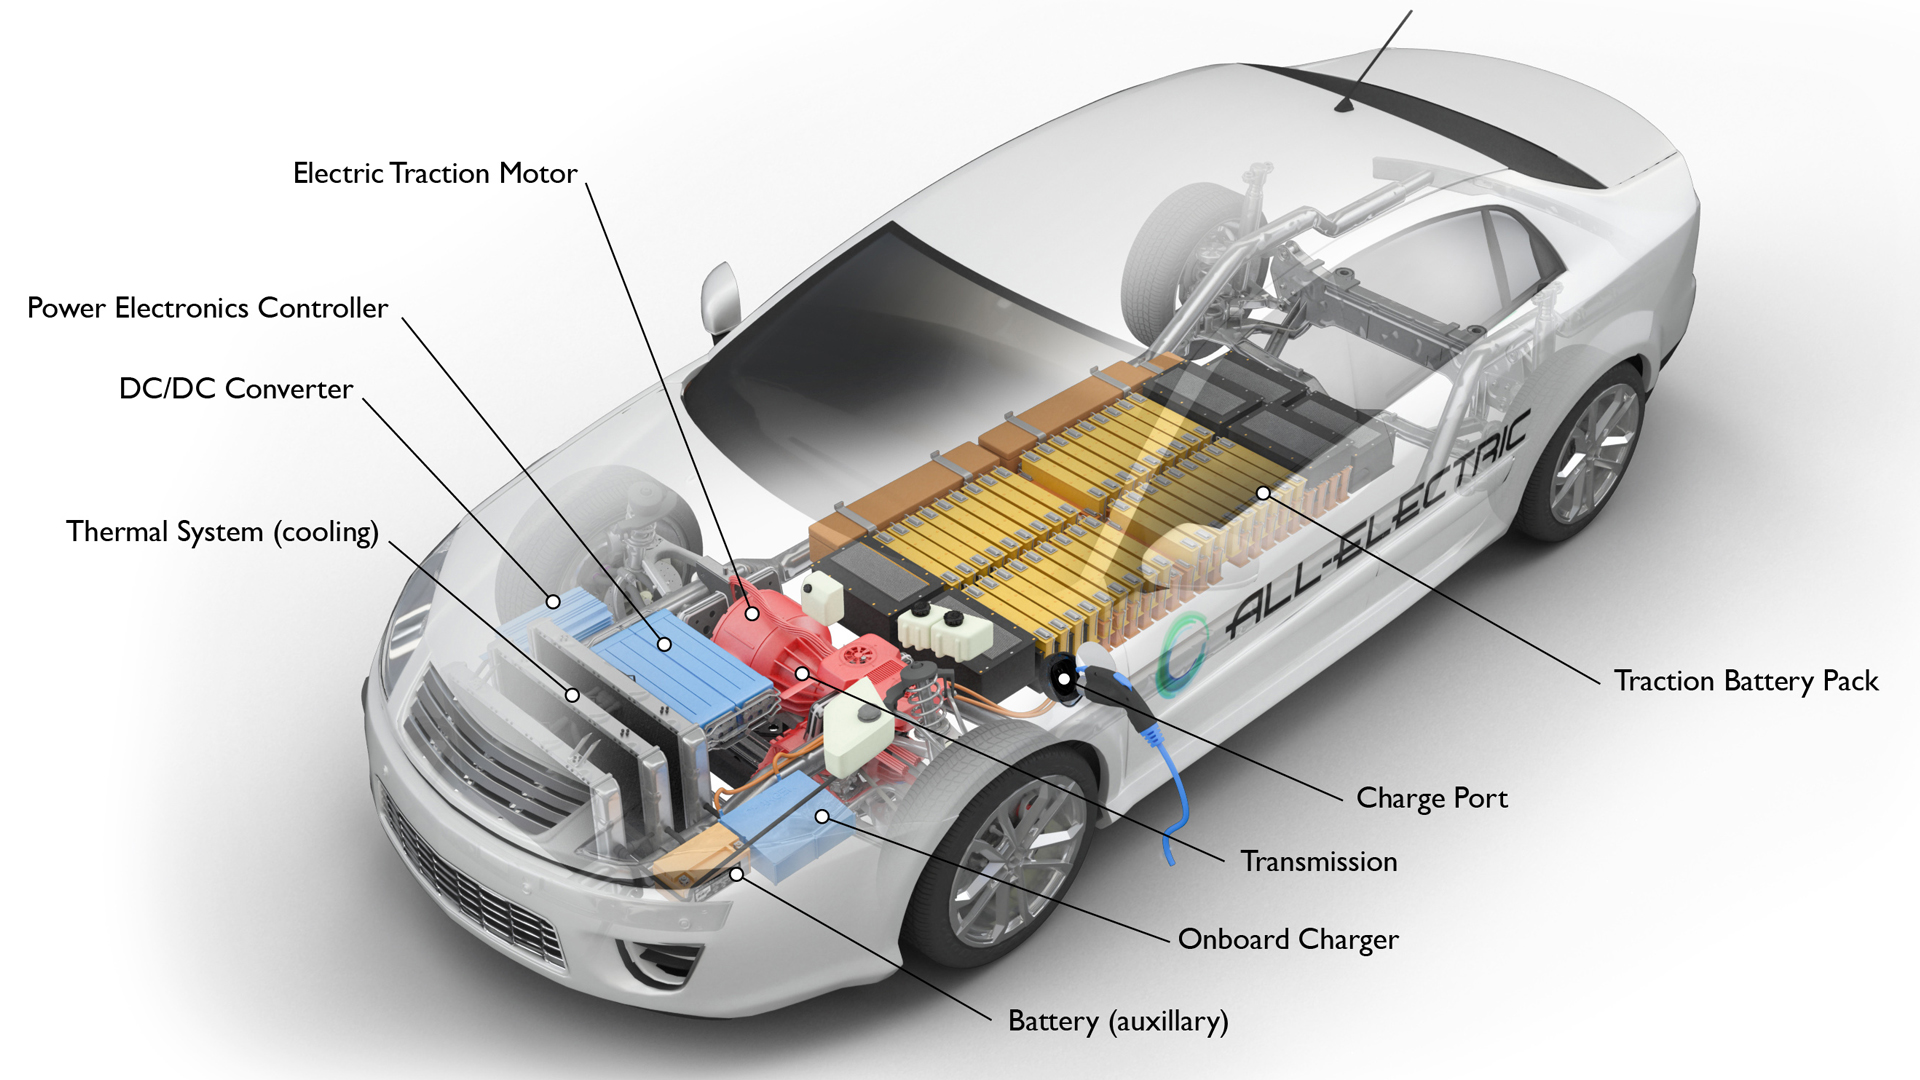 An internal diagram of an electric car